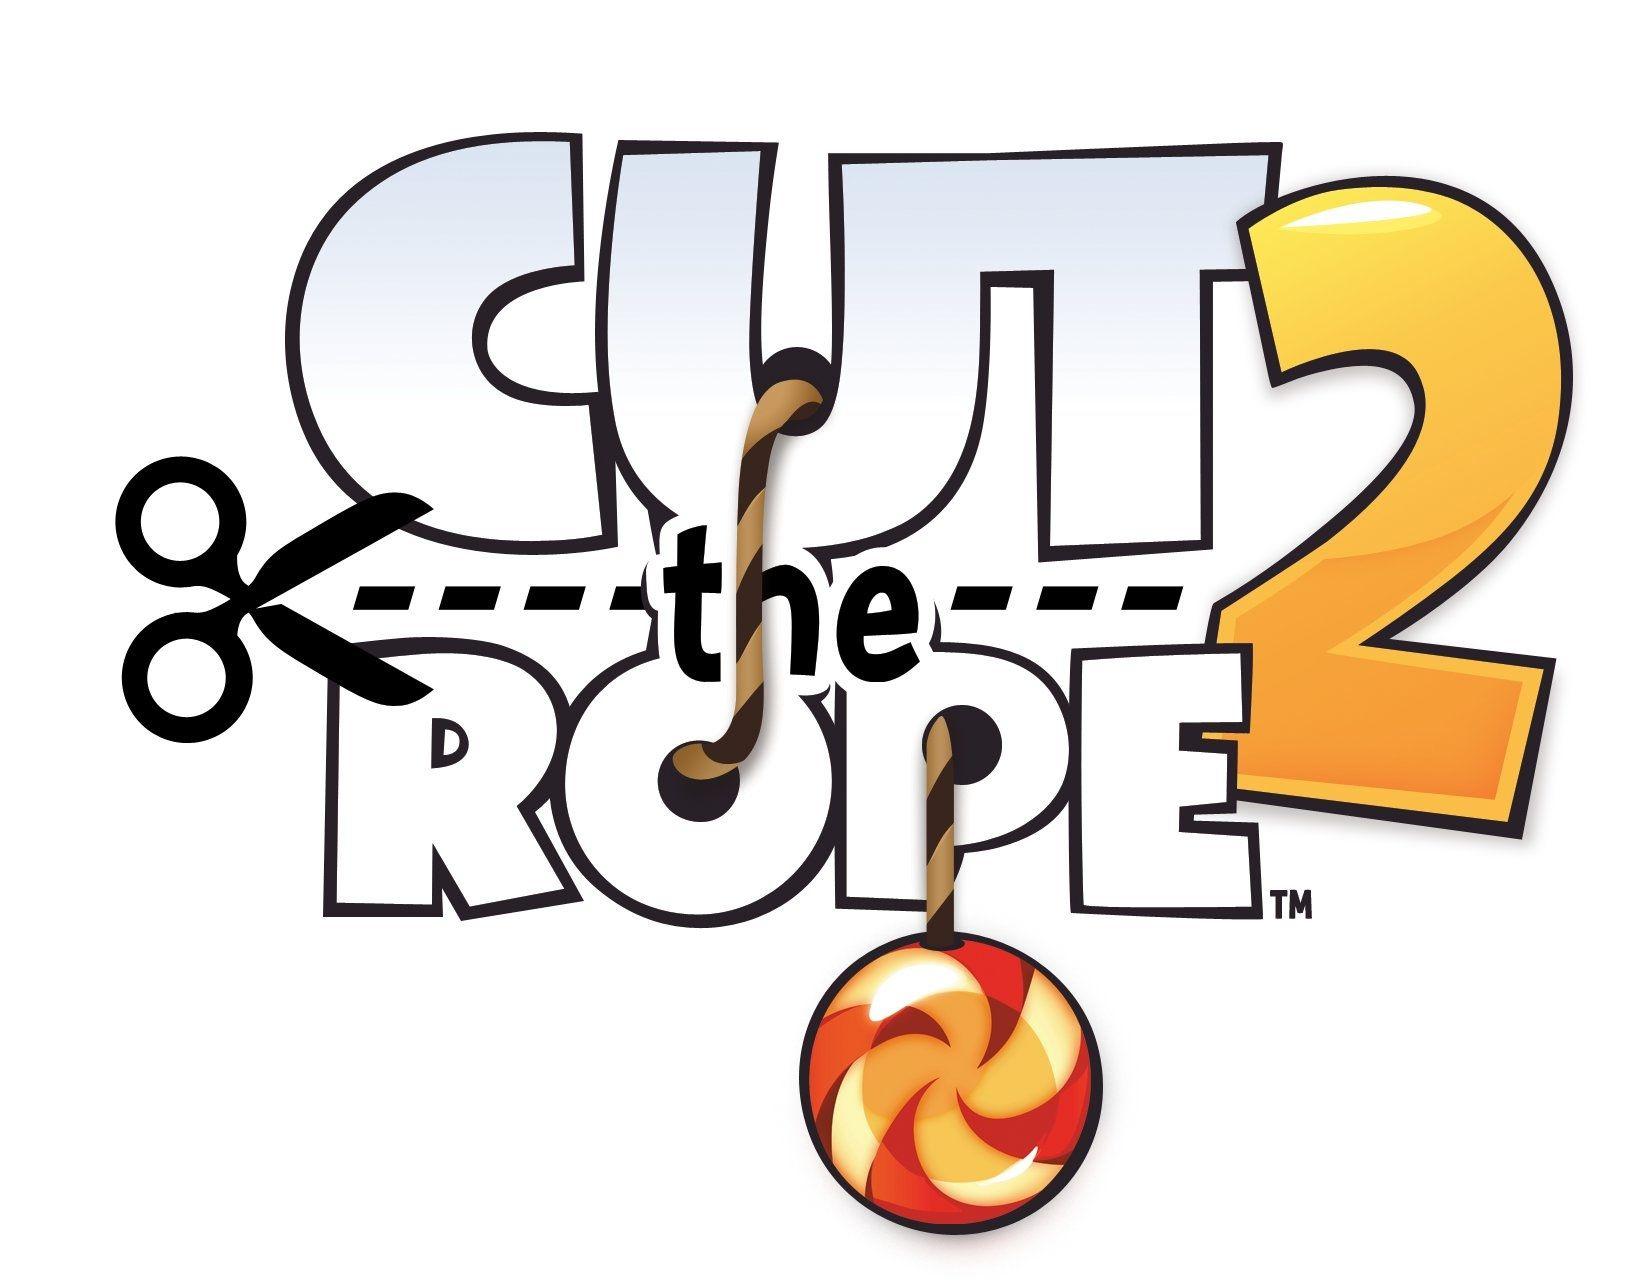 Cut the Rope Logo - Cut the Rope 2 logo.jpeg. Cut the Rope